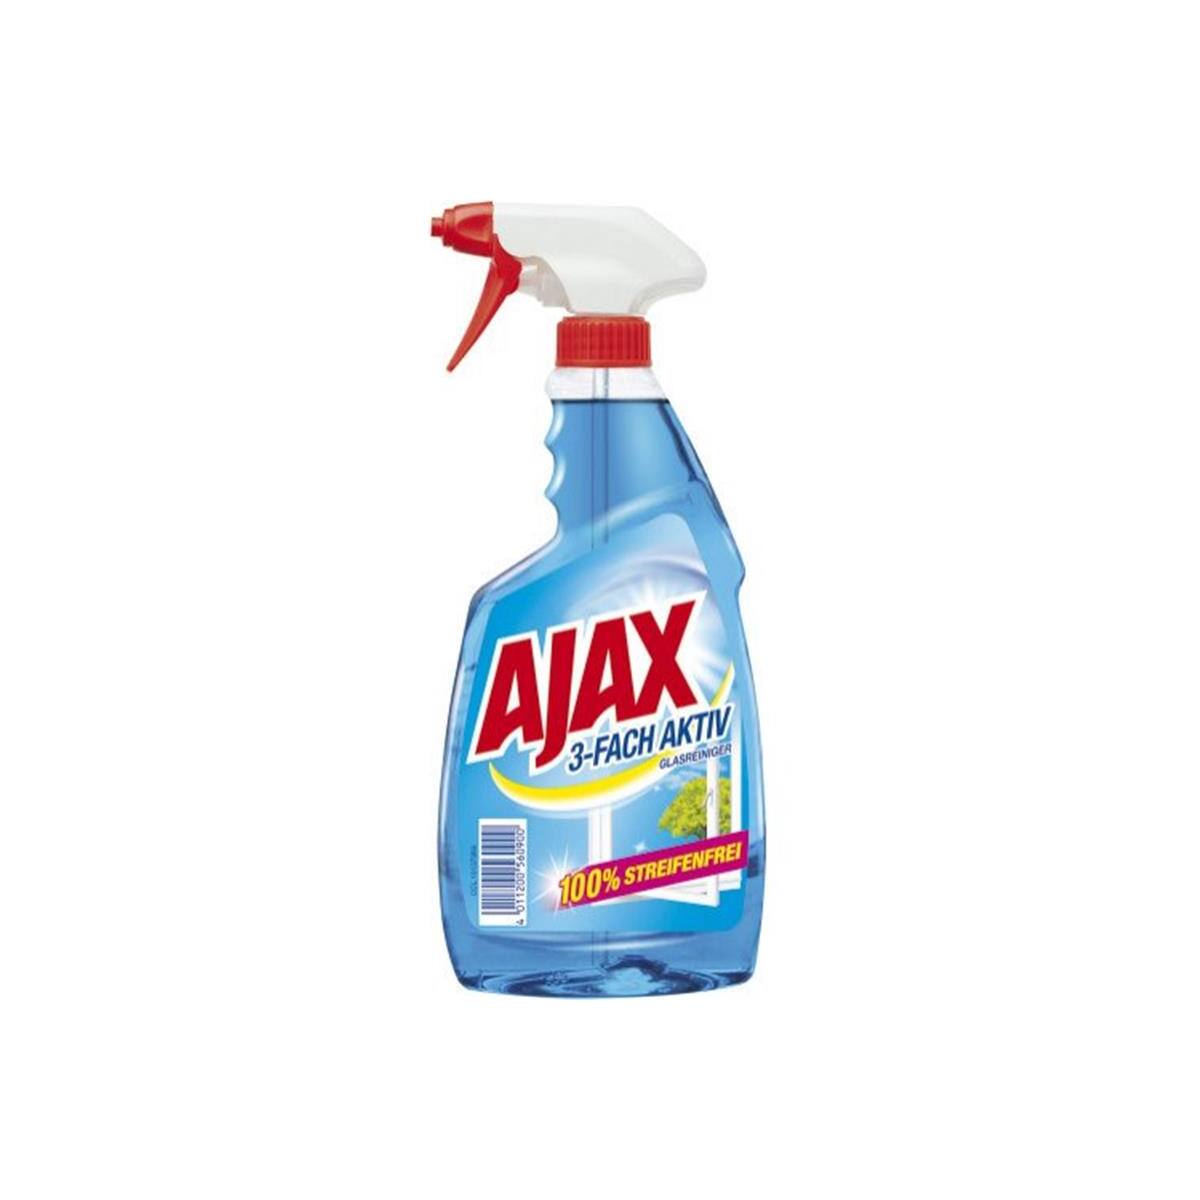 Ajax Glas & Flchenreniger 3-Fach Aktiv 500ml